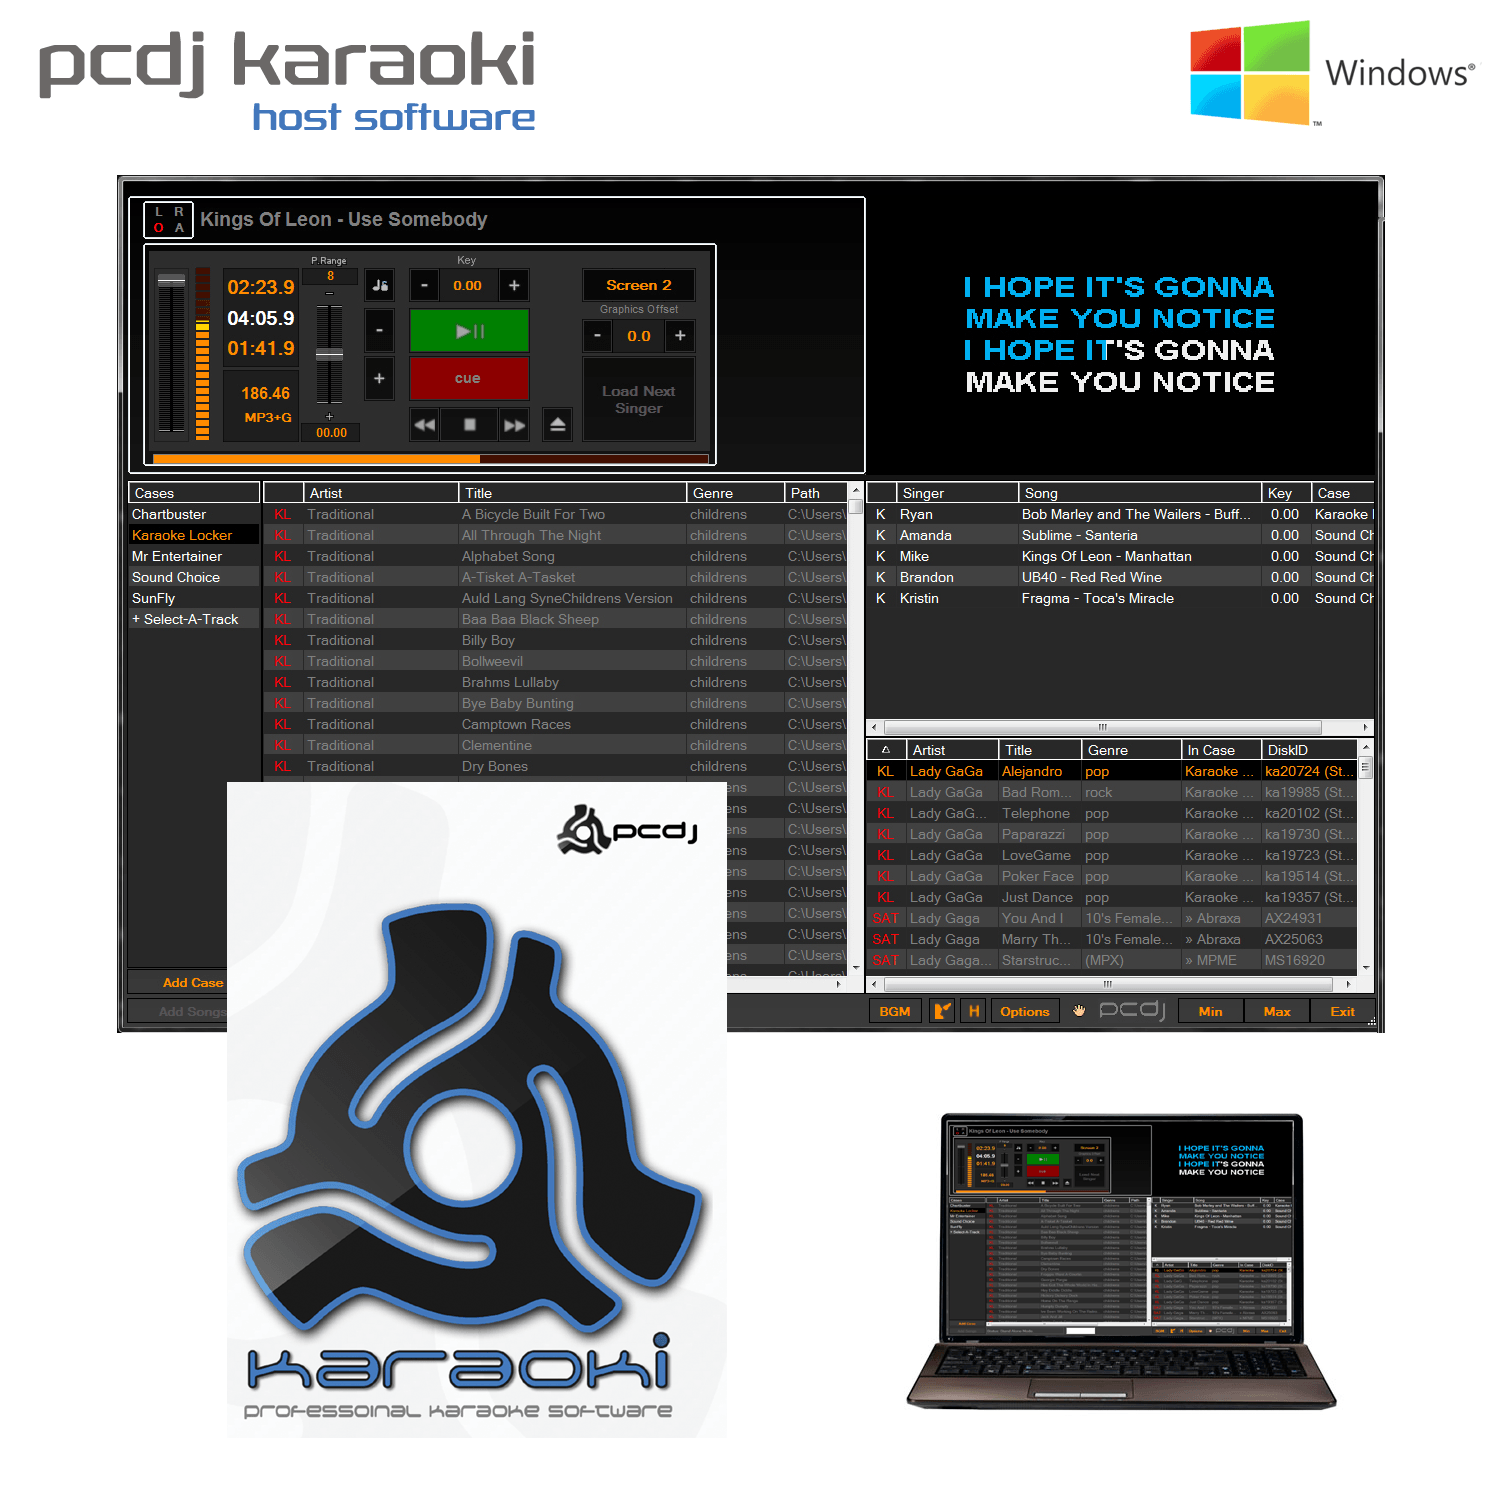 PCDJ Karaoki Hosting Software (Karaoke MP3+G Playback) Windows PC (CD-ROM) - Karaoke Home Entertainment